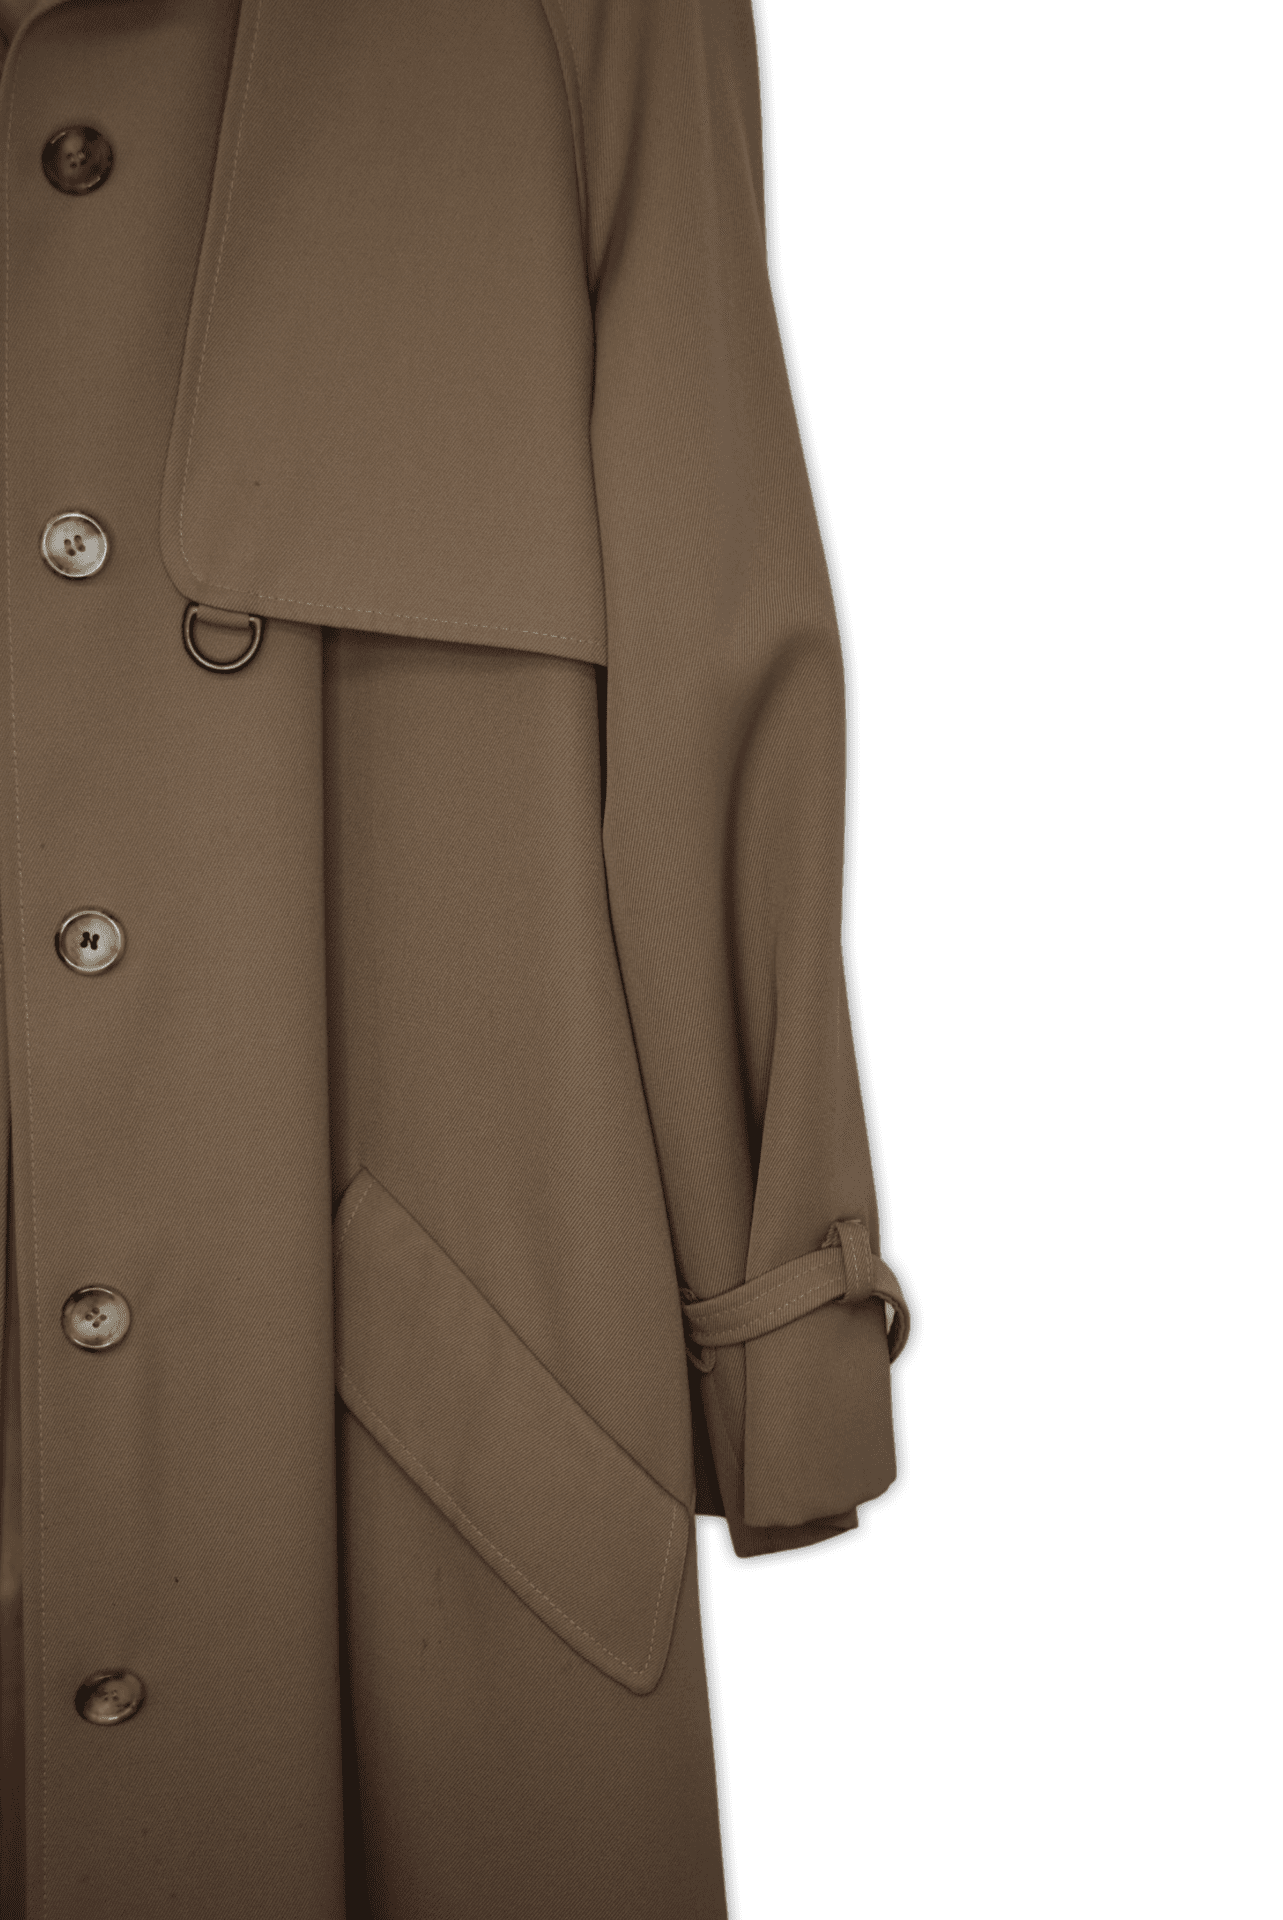 Large vintage trench coat